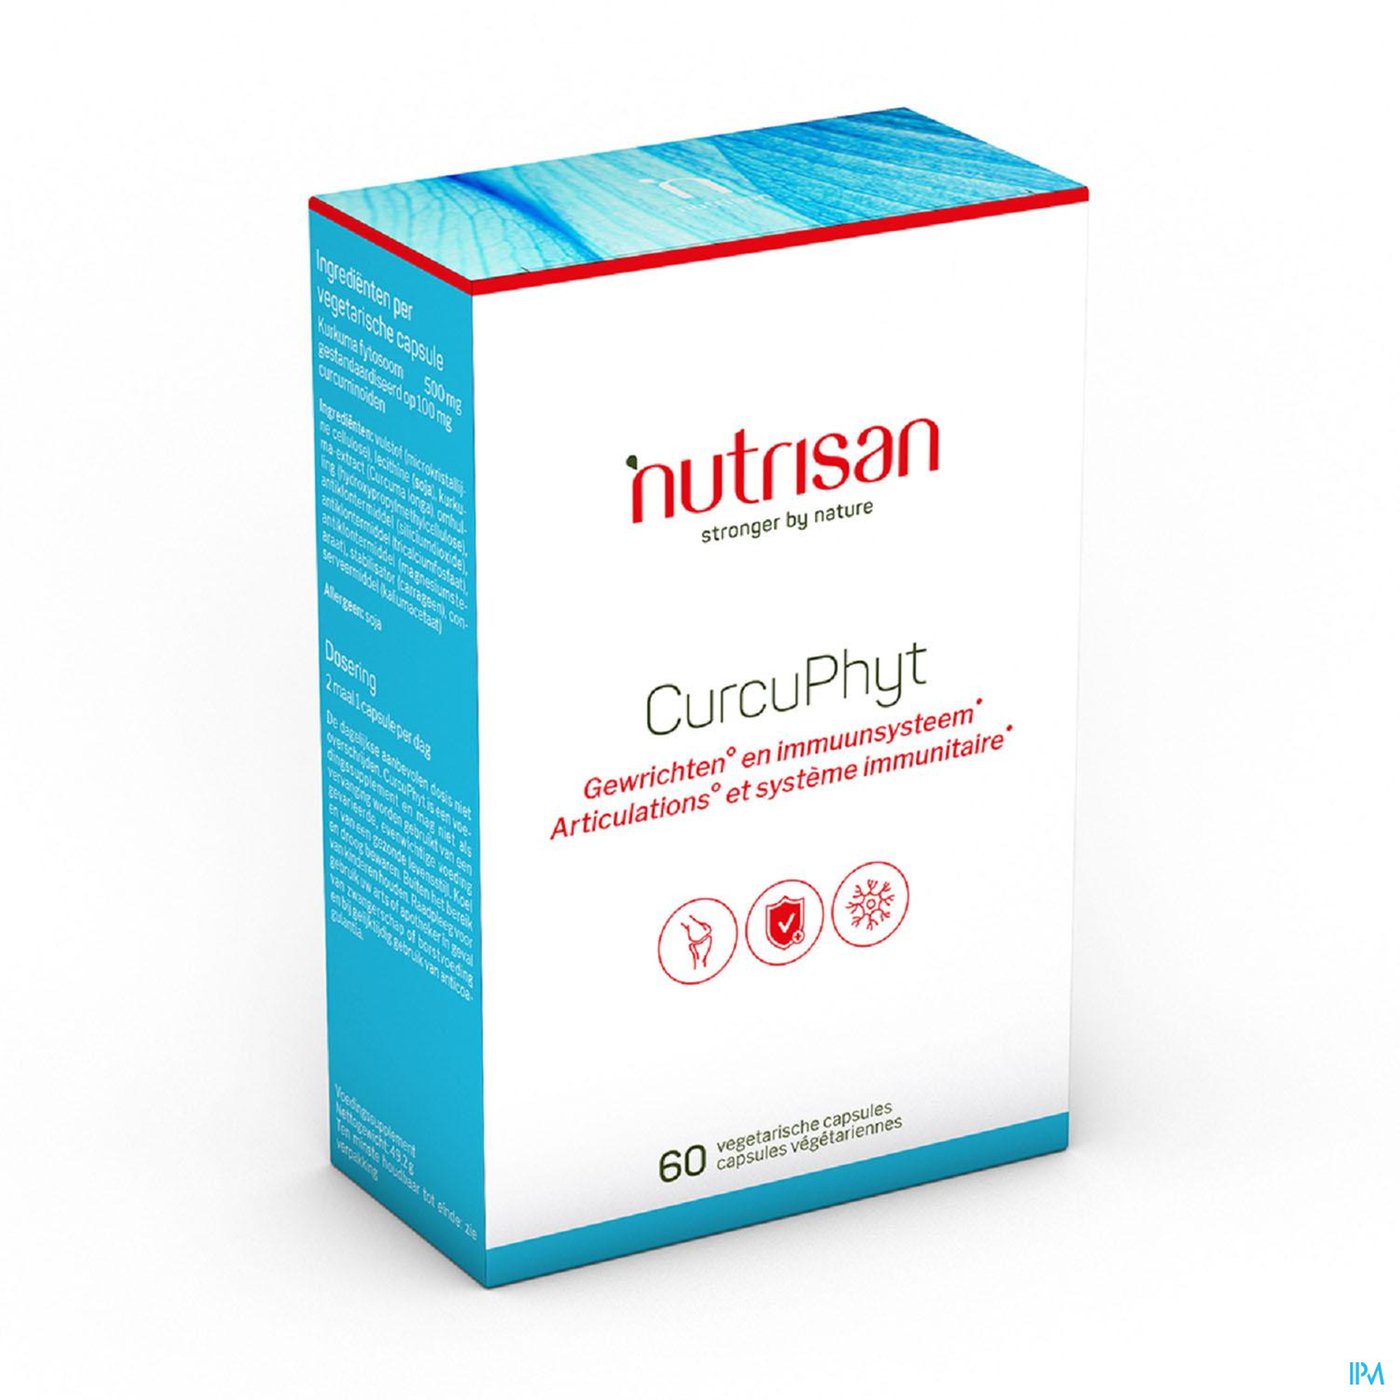 Curcuphyt 60 vegetarische capsules Nutrisan packshot